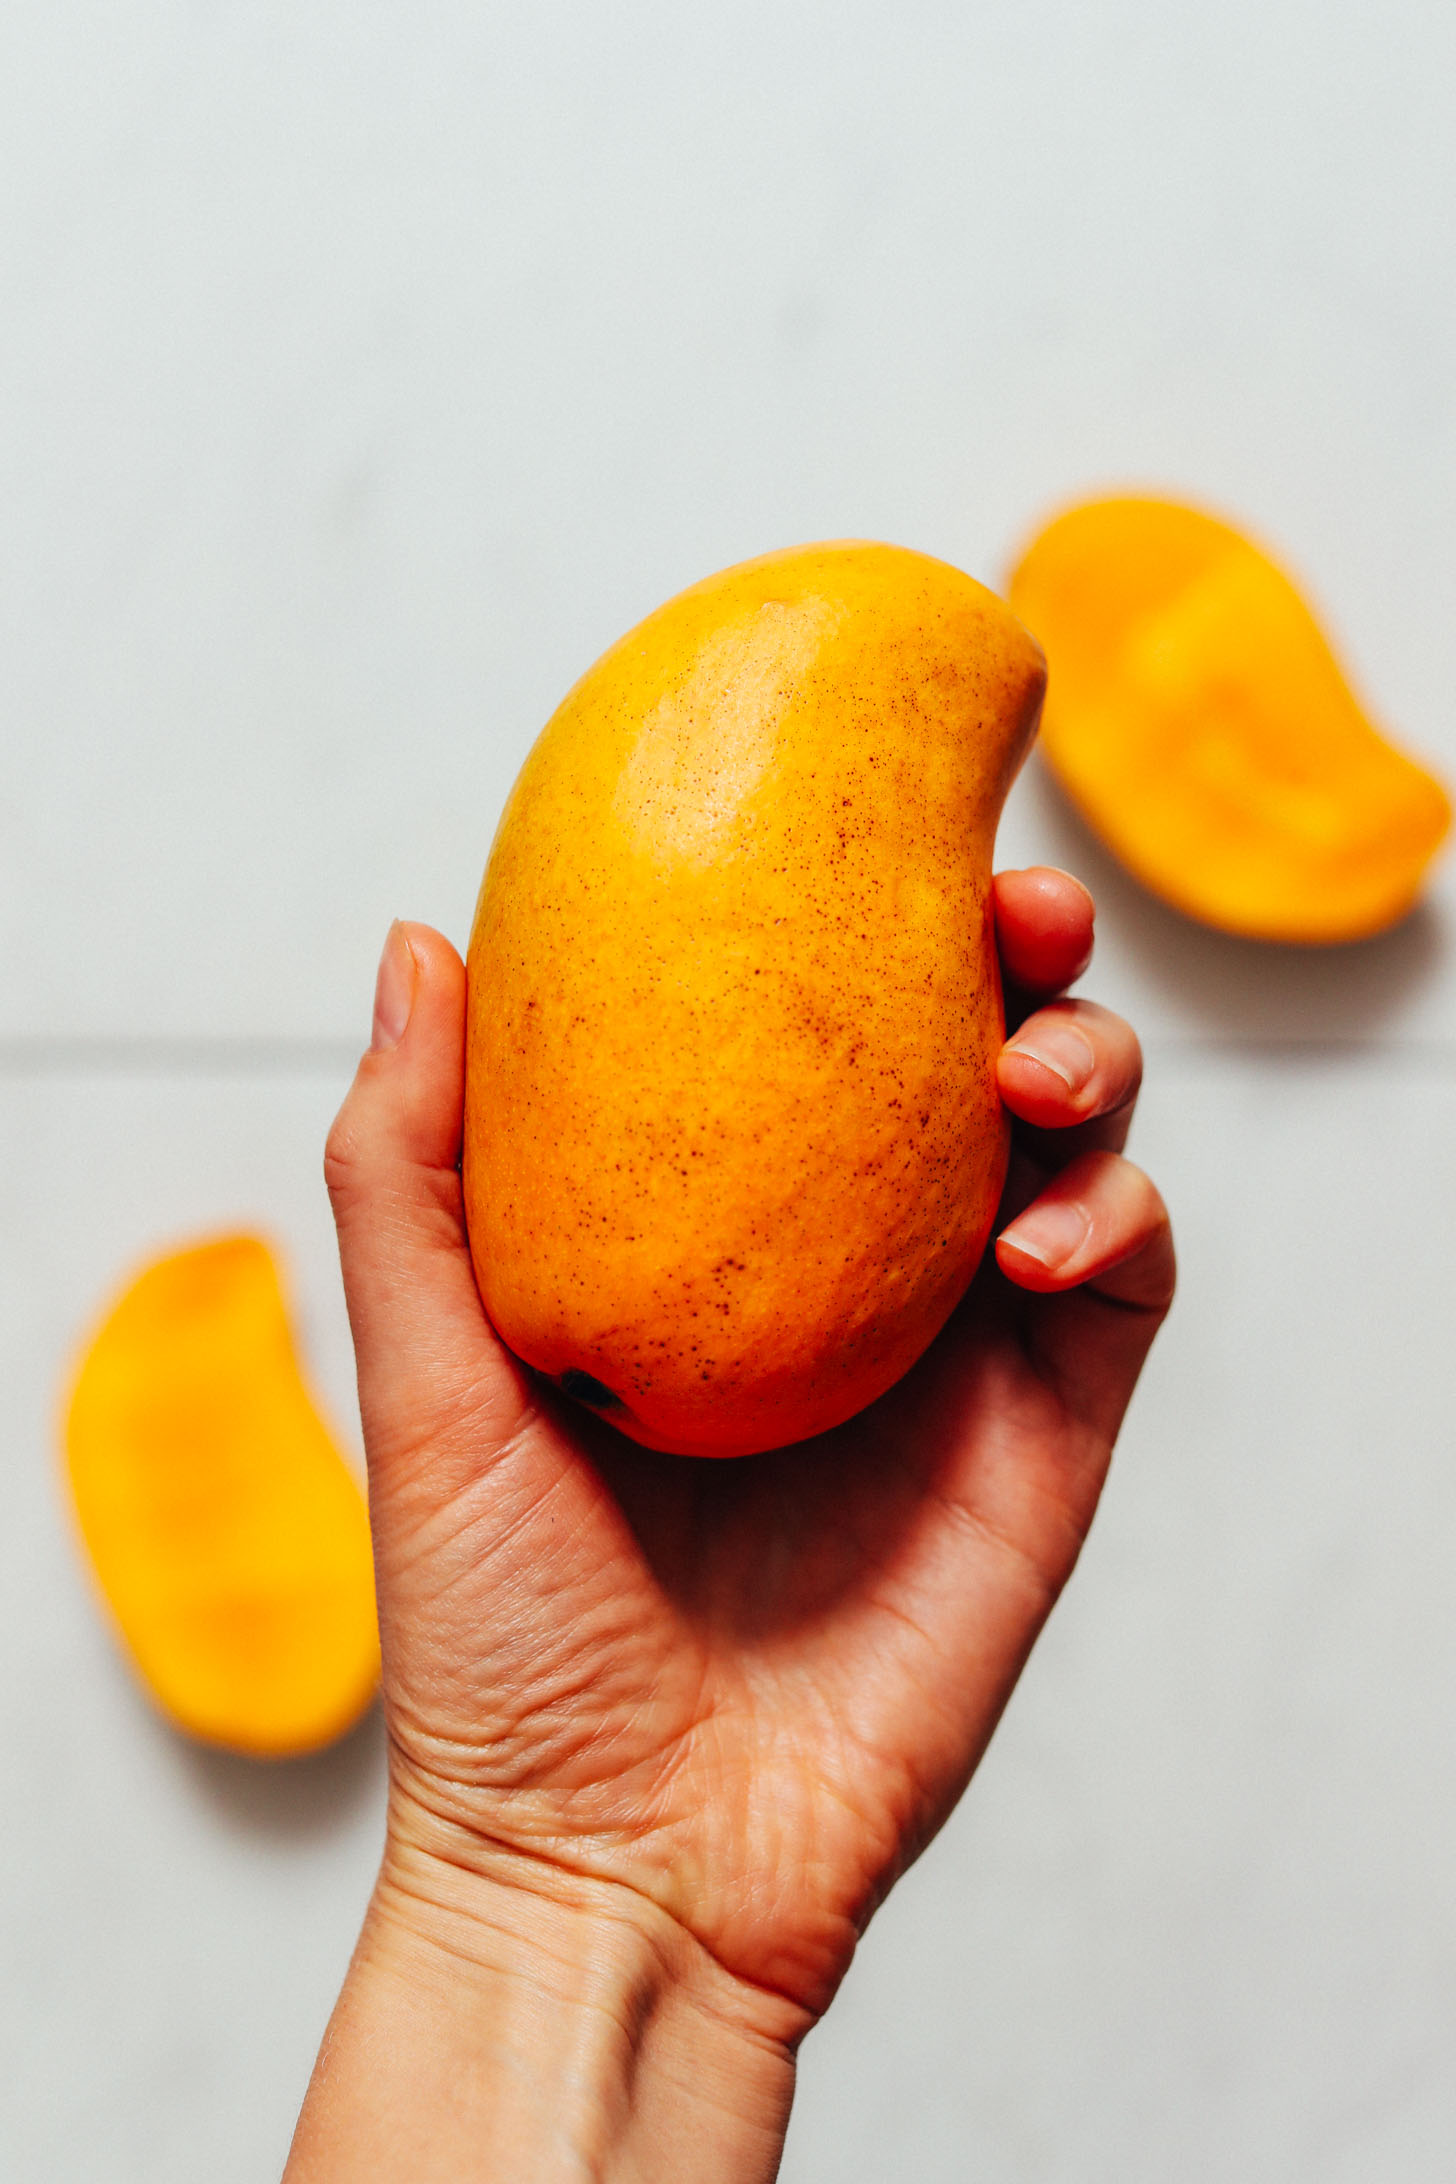 Holding a fresh mango